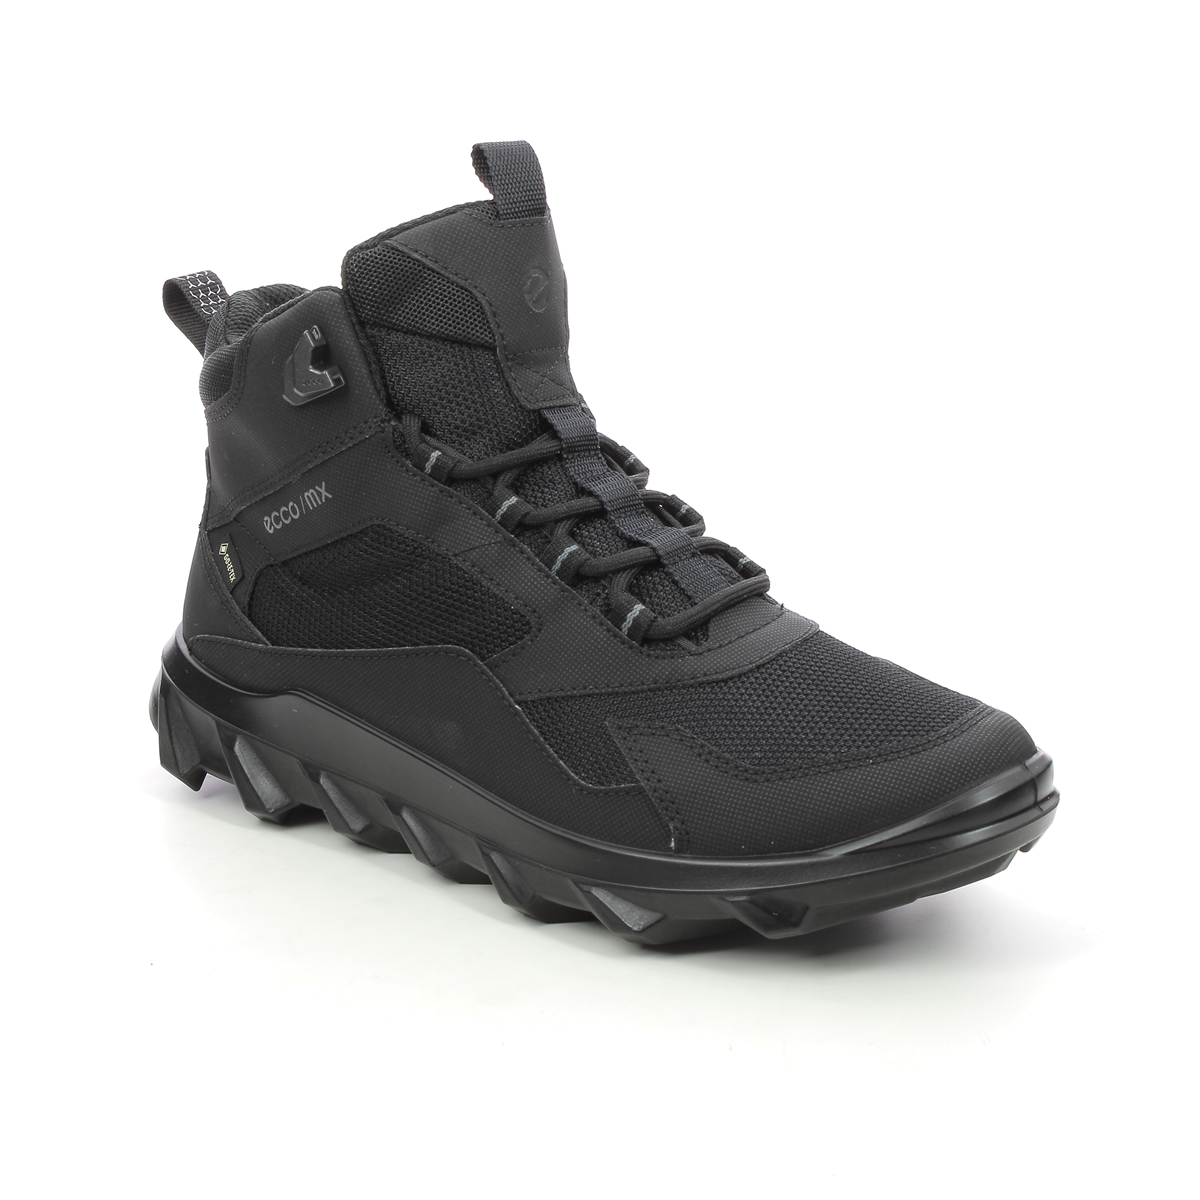 Ecco Mx Boot Gtx W Black Womens Walking Boots 820223-51052 In Size 39 In Plain Black